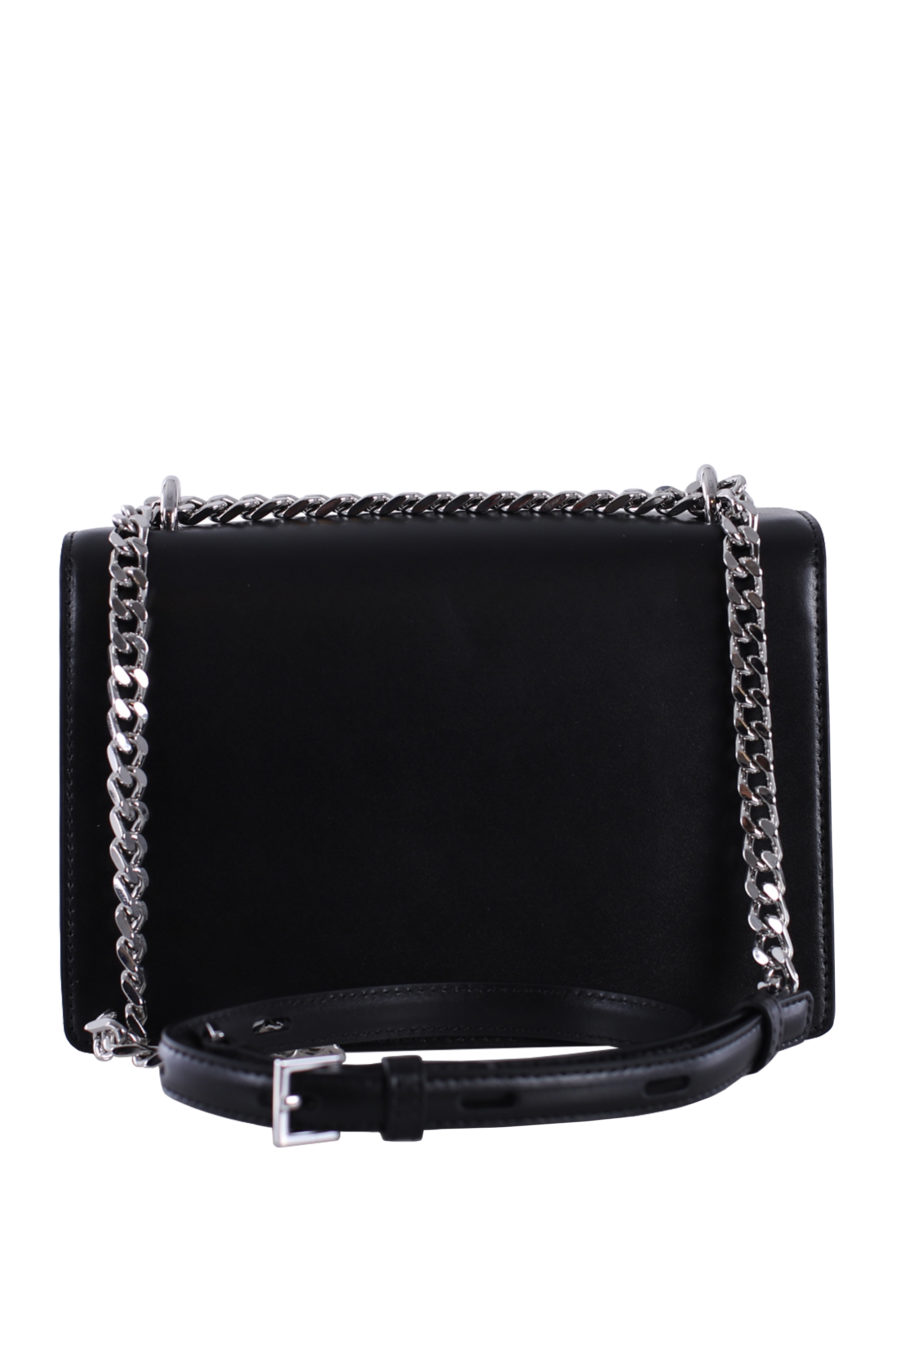 Black shoulder bag with pin logo - IMG 0080